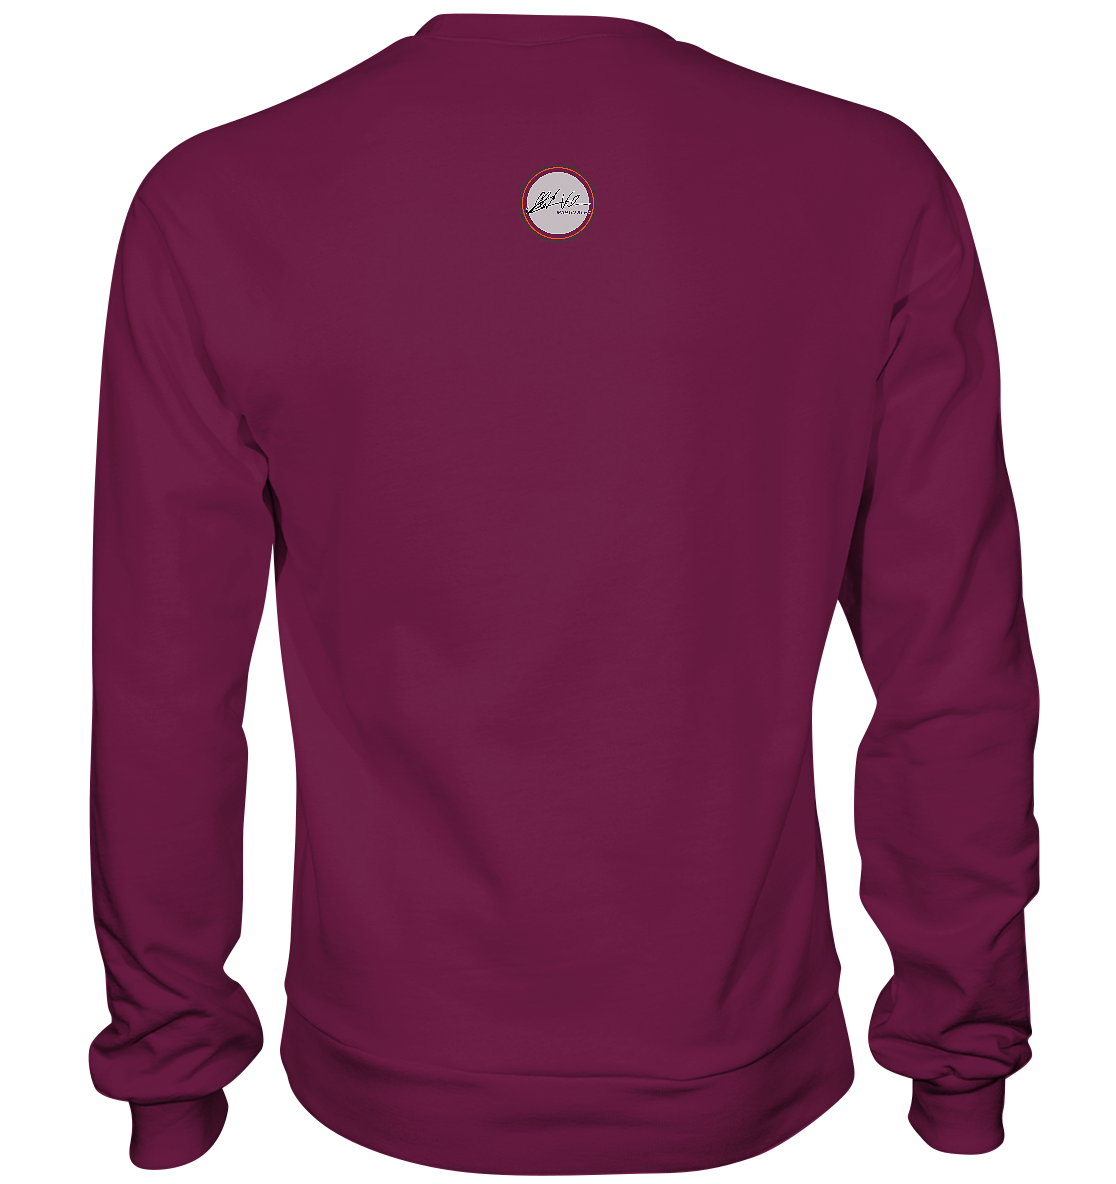 founder v2 - sweatshirt | various colors